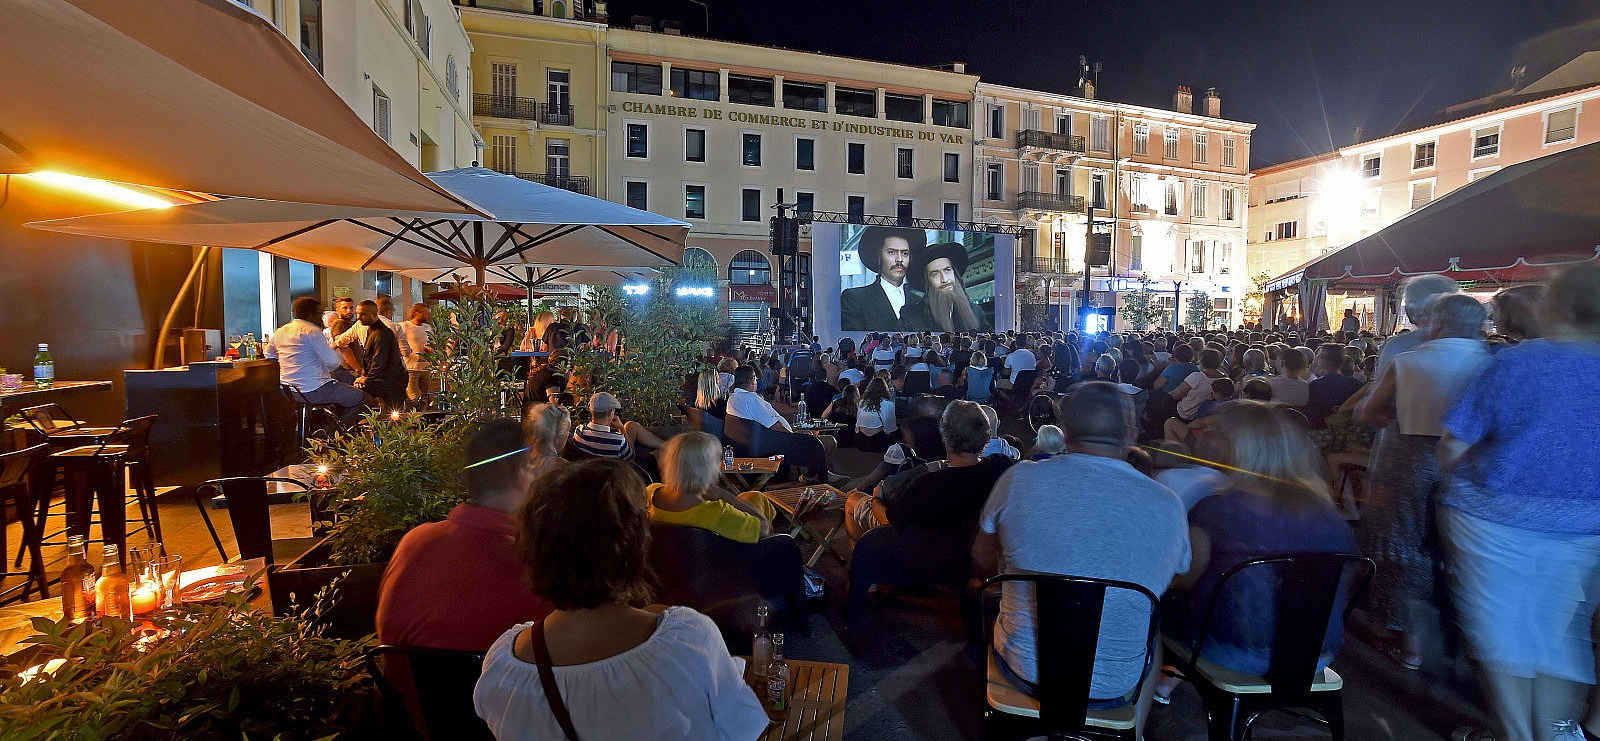 Open-air cinema in July